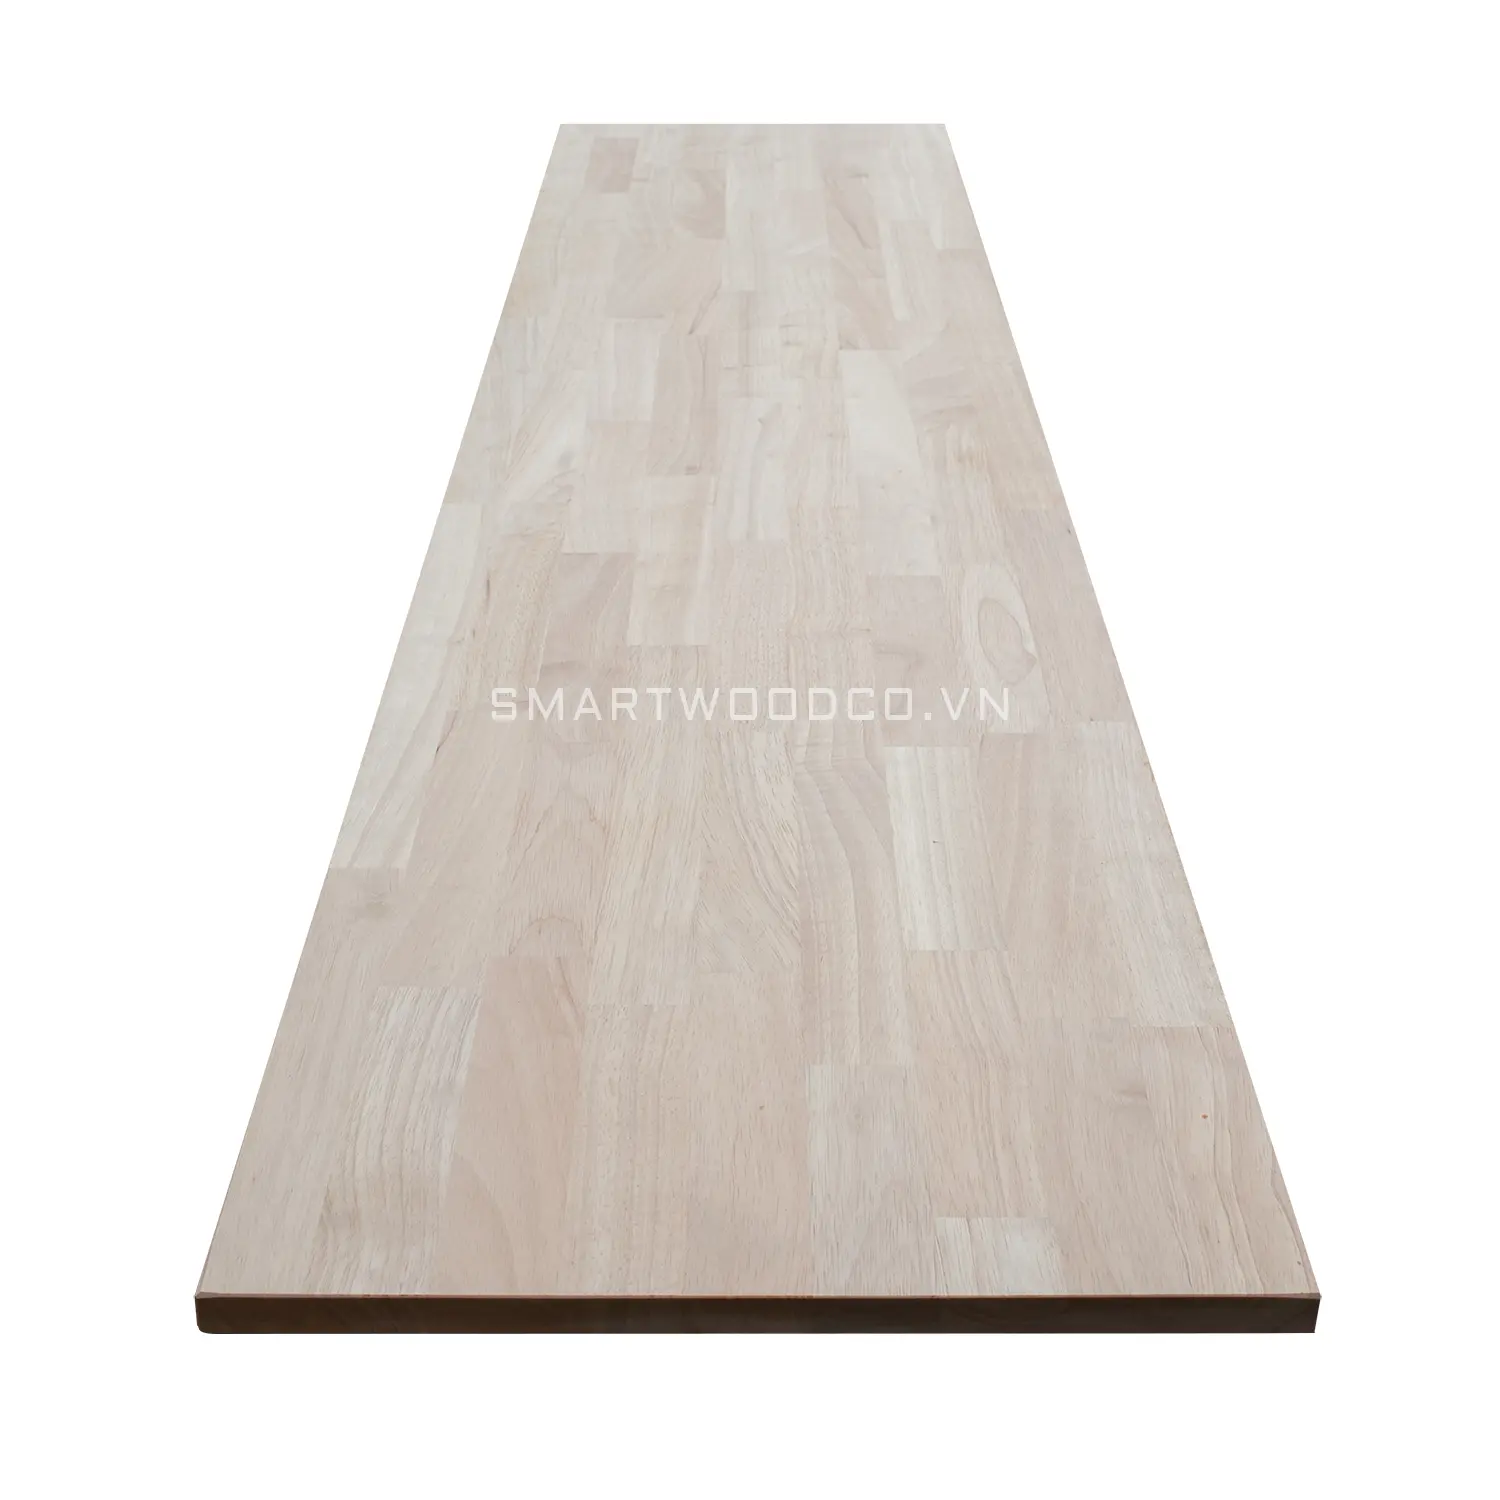 सबसे सस्ती कीमत-रबर लकड़ी टेबल टॉप/काउंटरटॉप्स/वर्कटॉप/कचिंग ब्लॉक/लकड़ी पैनल/फर्नीचर के लिए लकड़ी बोर्ड